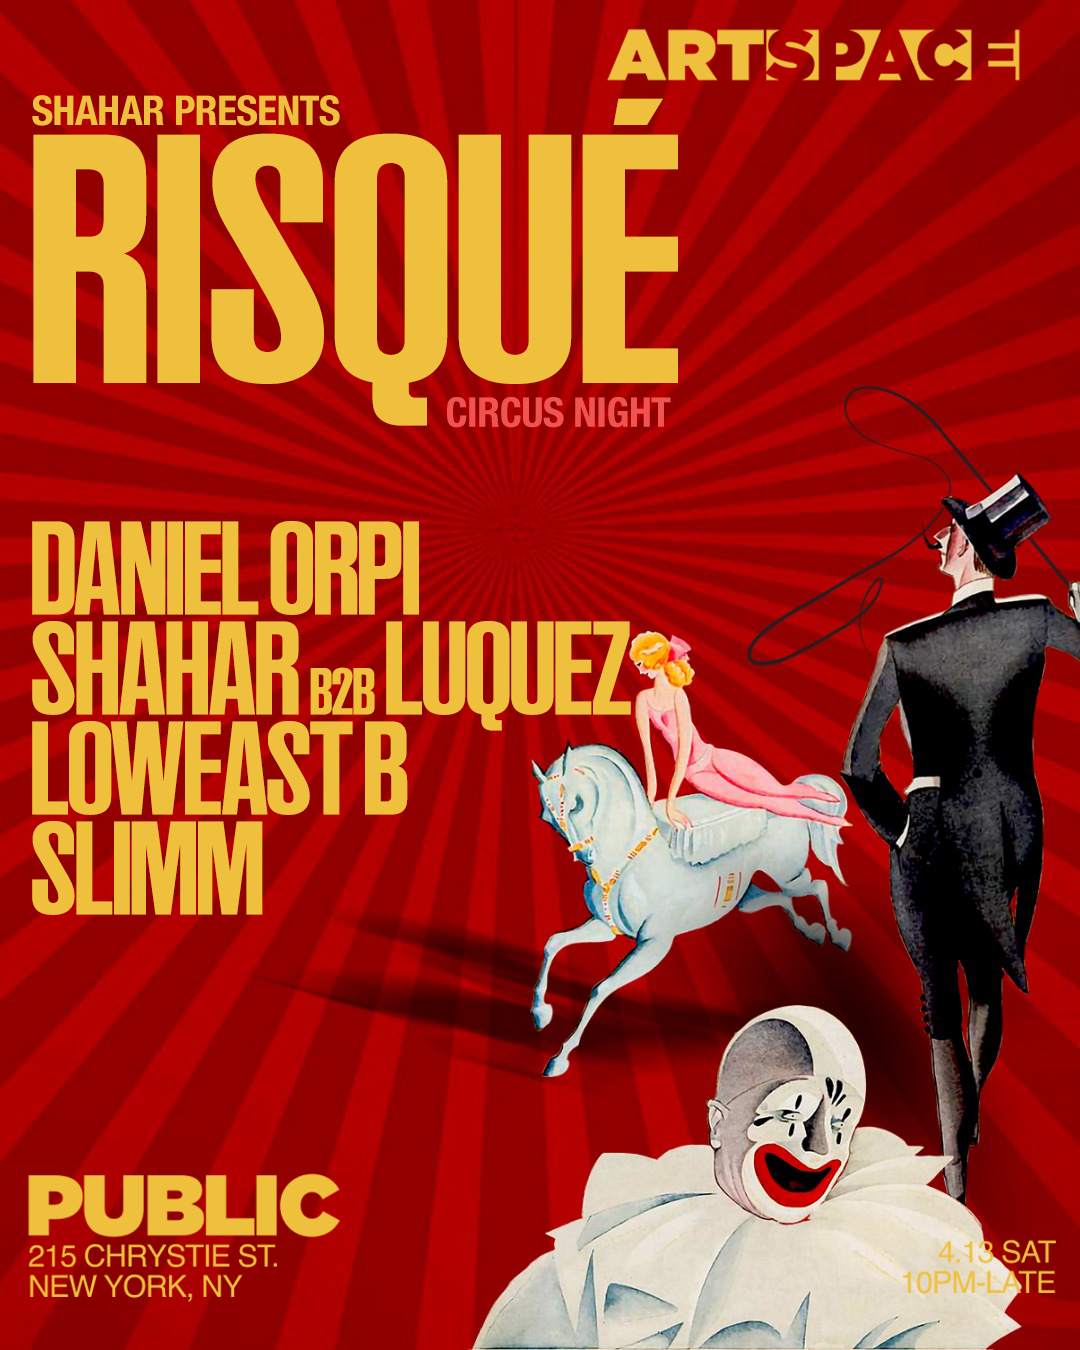 Shahar presents Risqué circus night W Daniel Orpi - フライヤー表